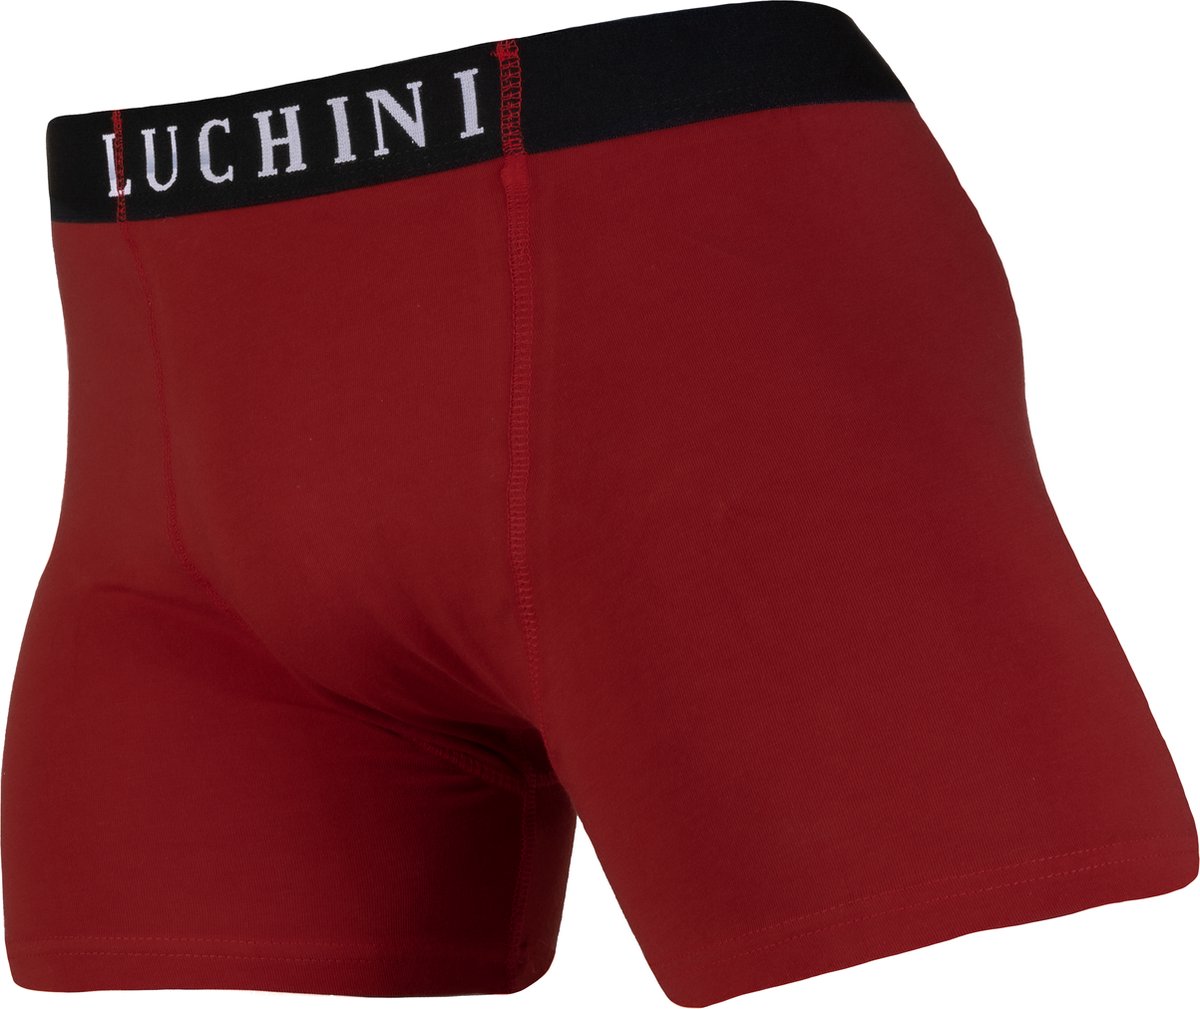 Luchini Clothing ® - LC Classic Maat L - Premium Boxershorts heren - Heren Privacy Boxers met verborgen vak - 2-PACK boxershorts - Stealth boxers - Rood